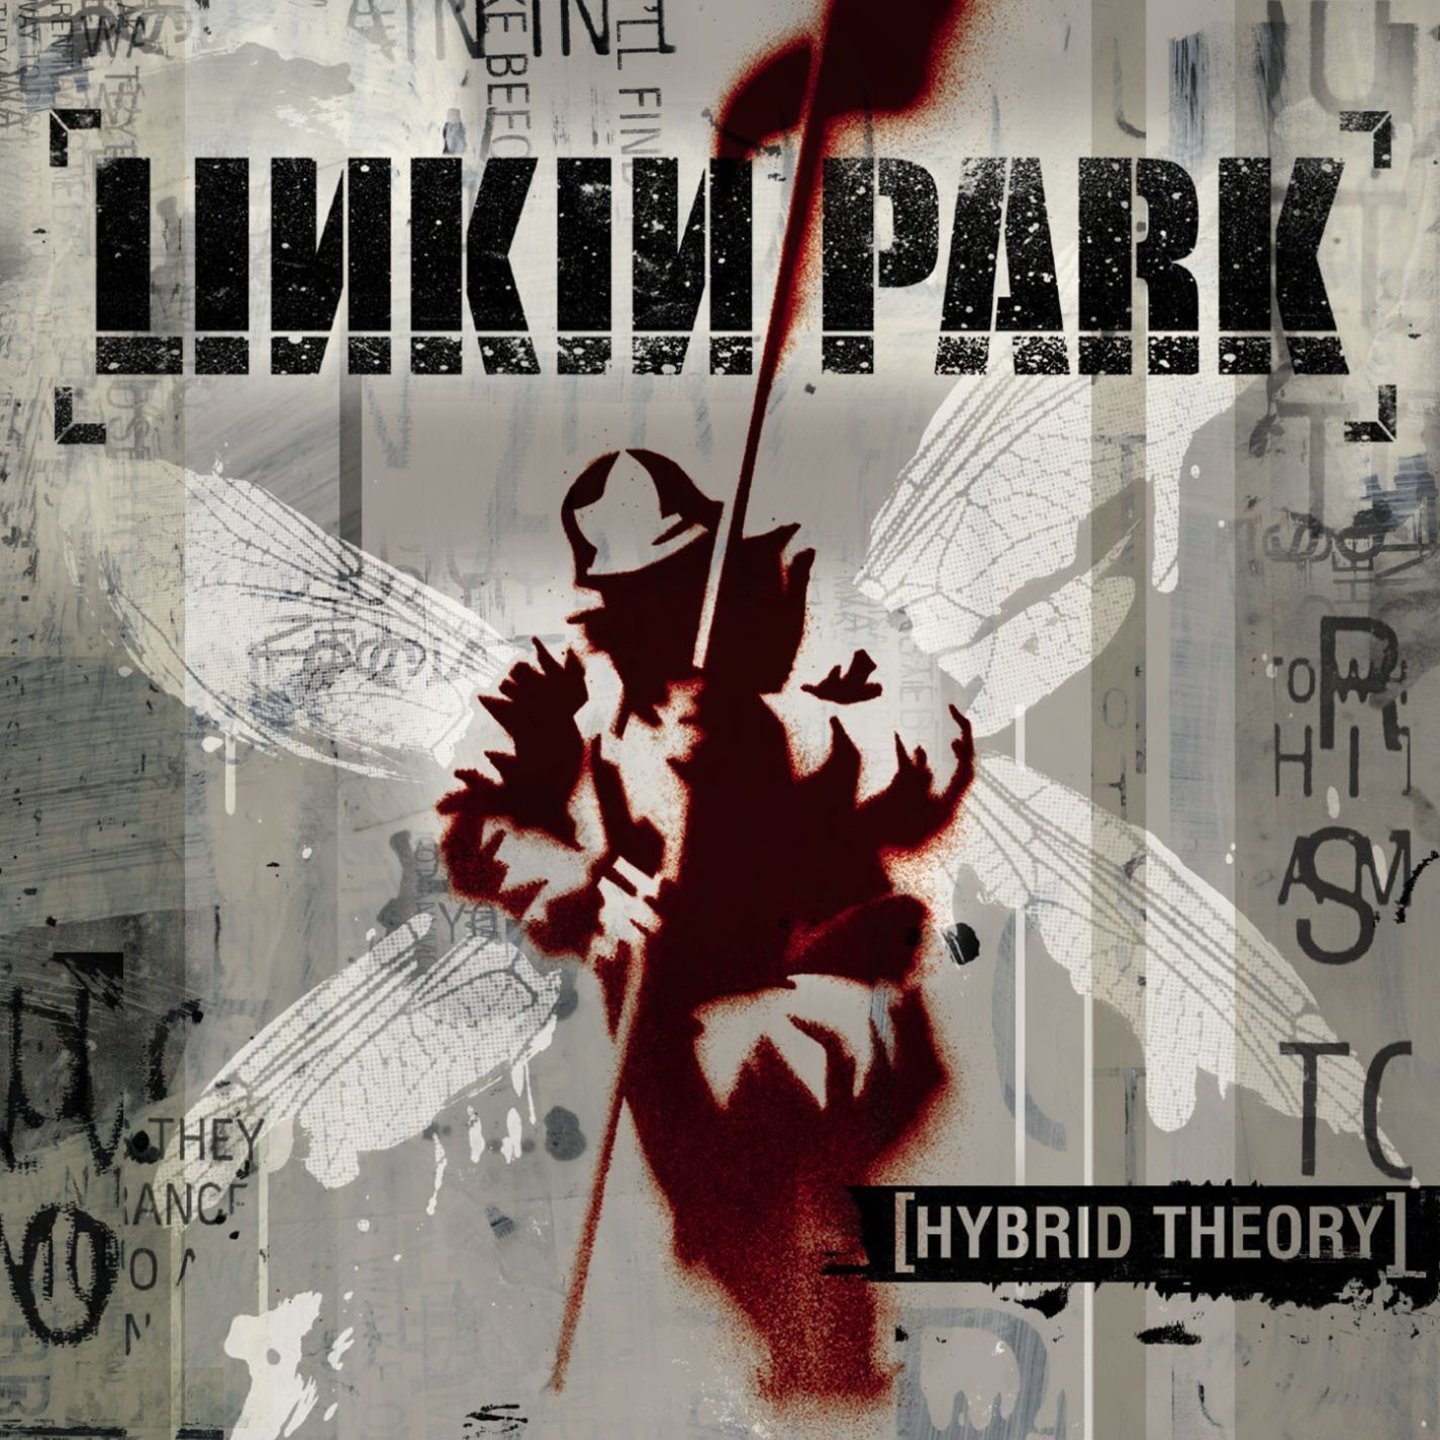 LINKIN PARK - Hybrid Theory LP